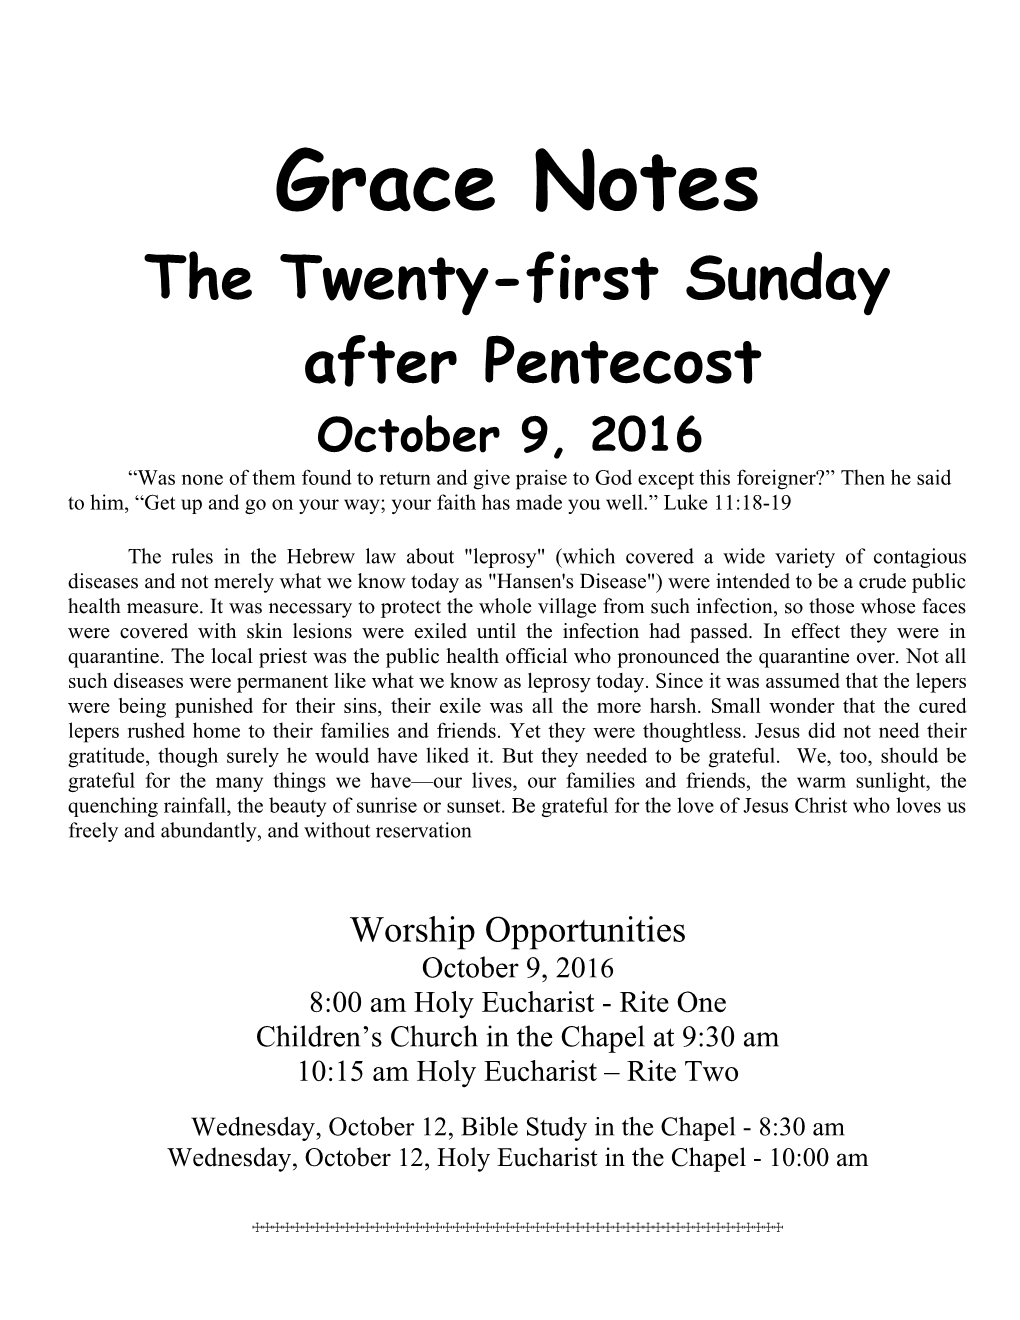 The Twenty-First Sunday After Pentecost